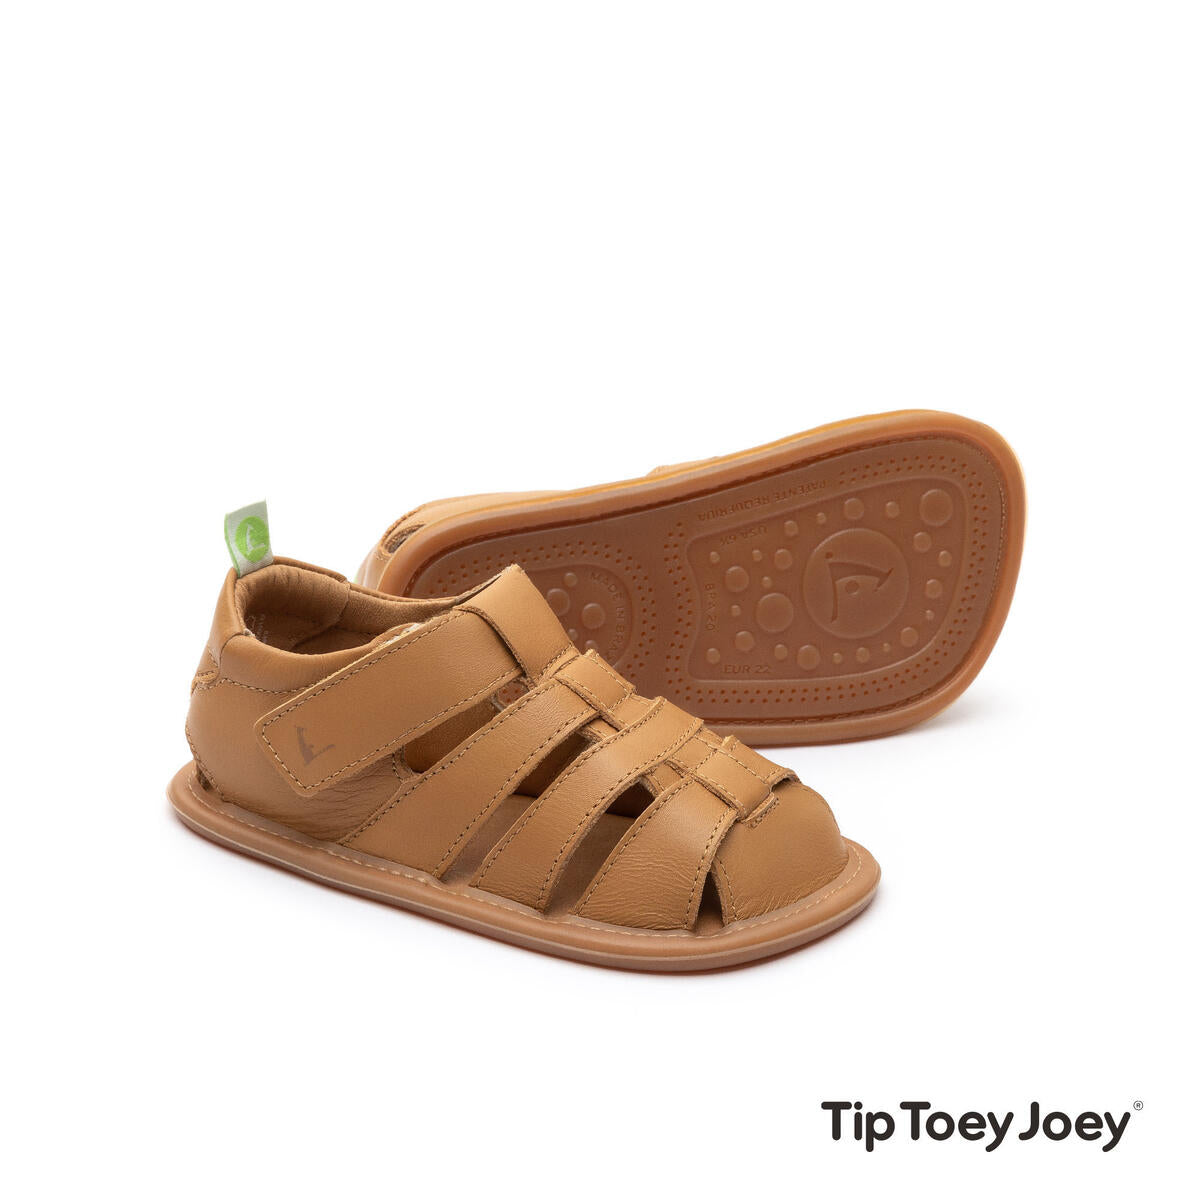 Tip Toey Joey - Sandy Caramelo Sandals